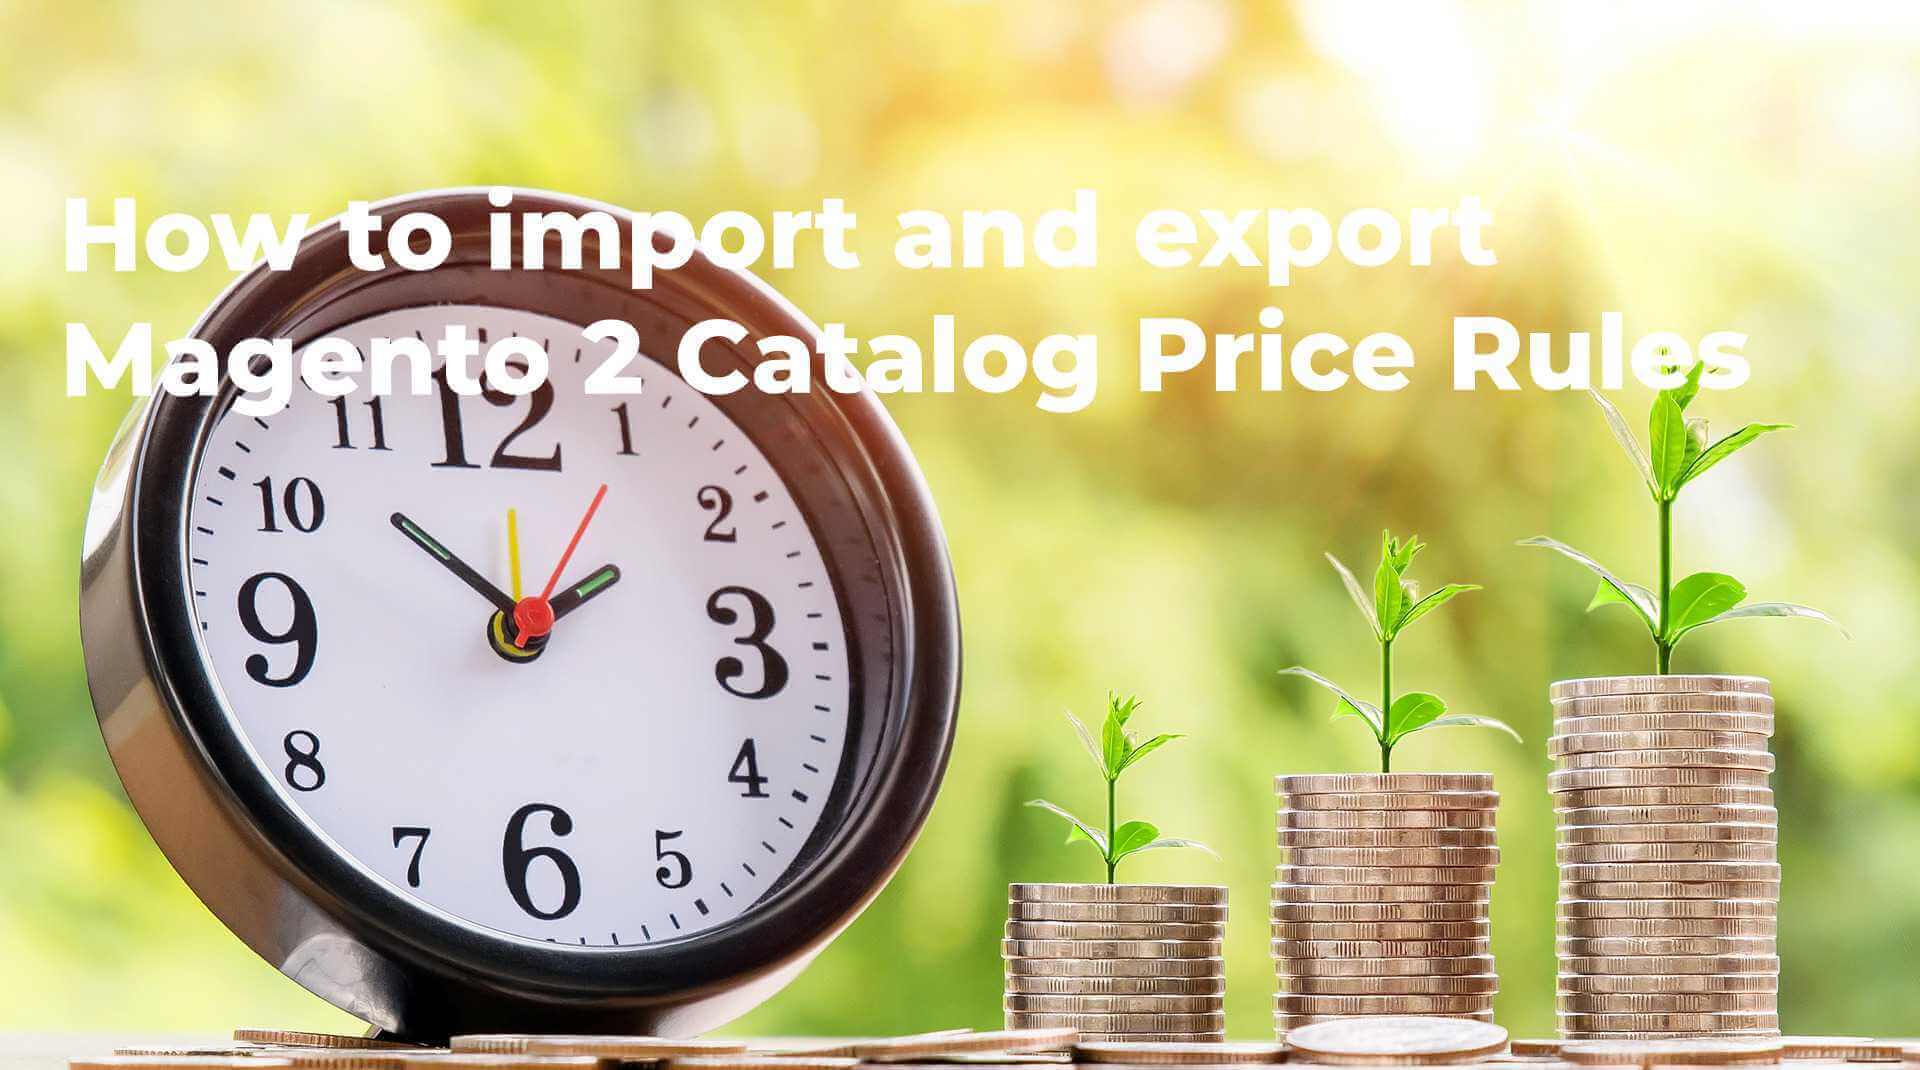 Magento 2 Catalog Price Rules: create, edit, import